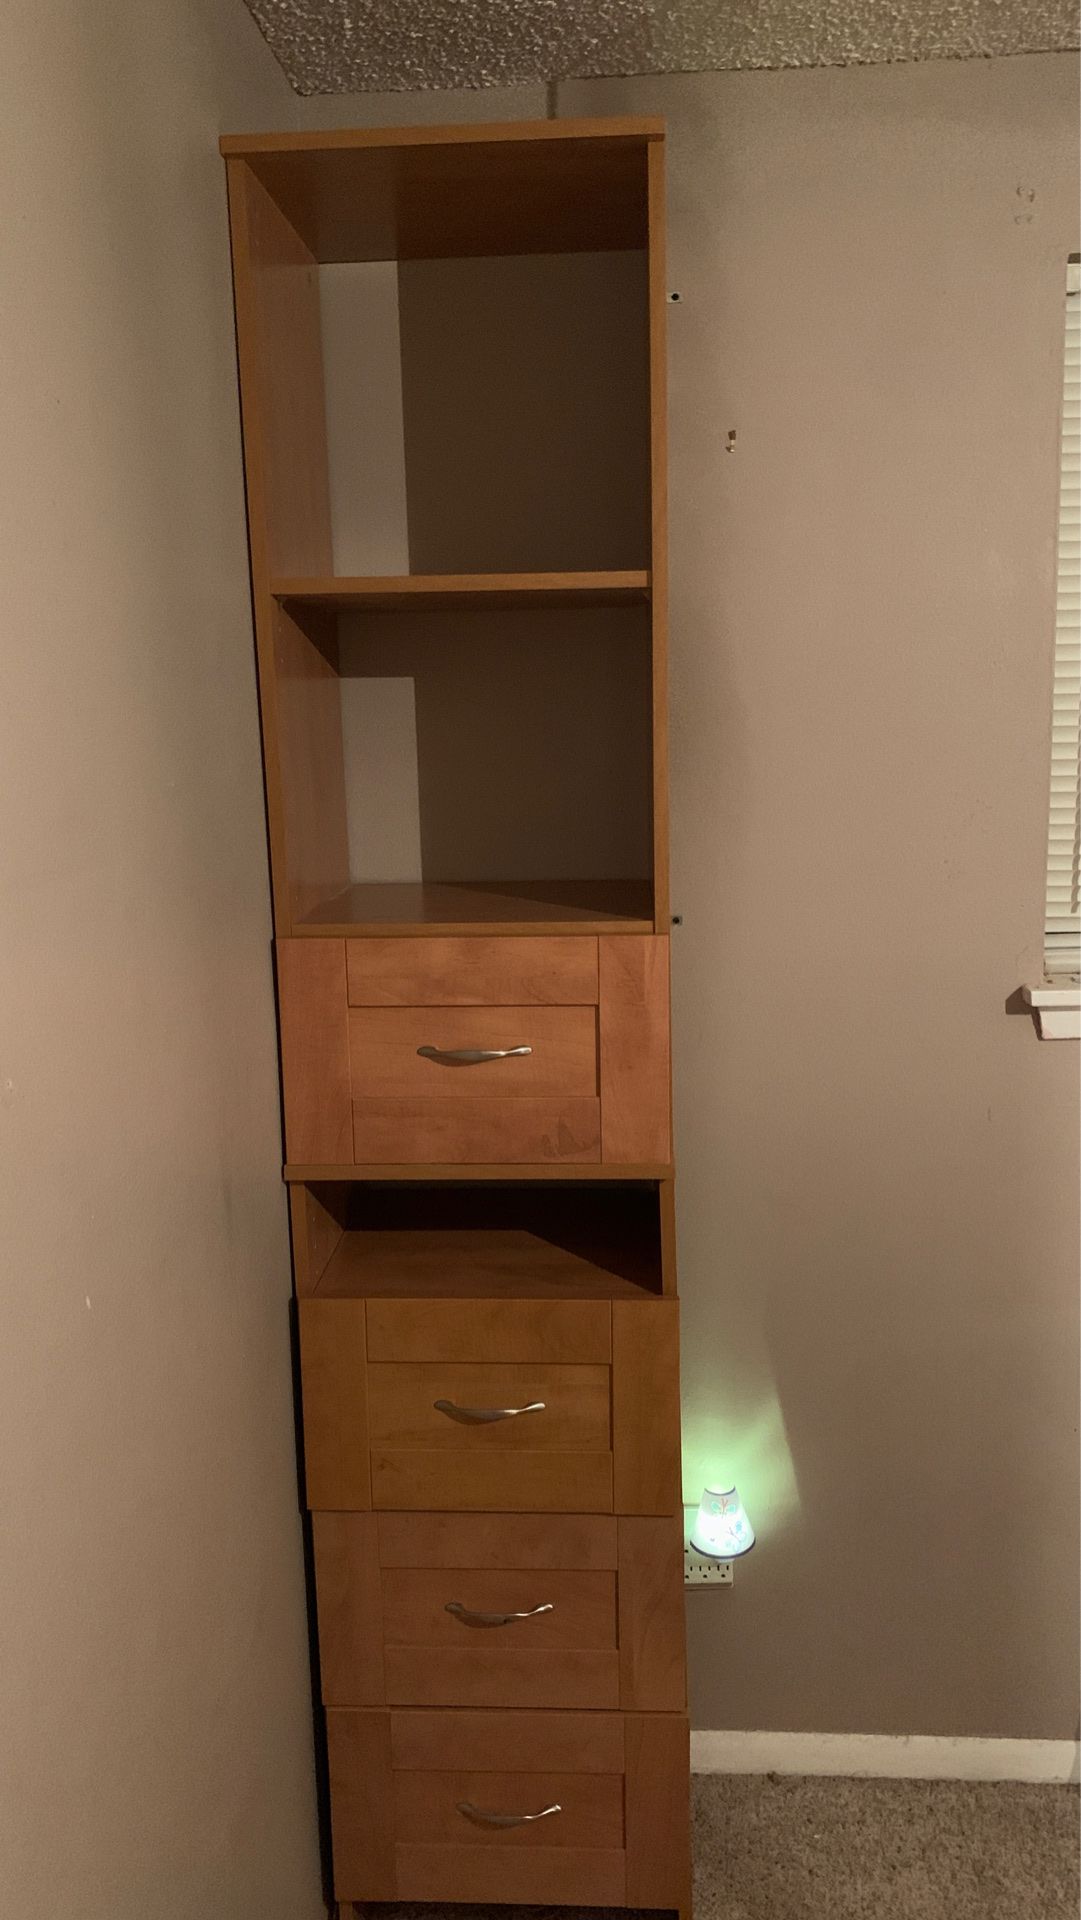 Dresser with shelves